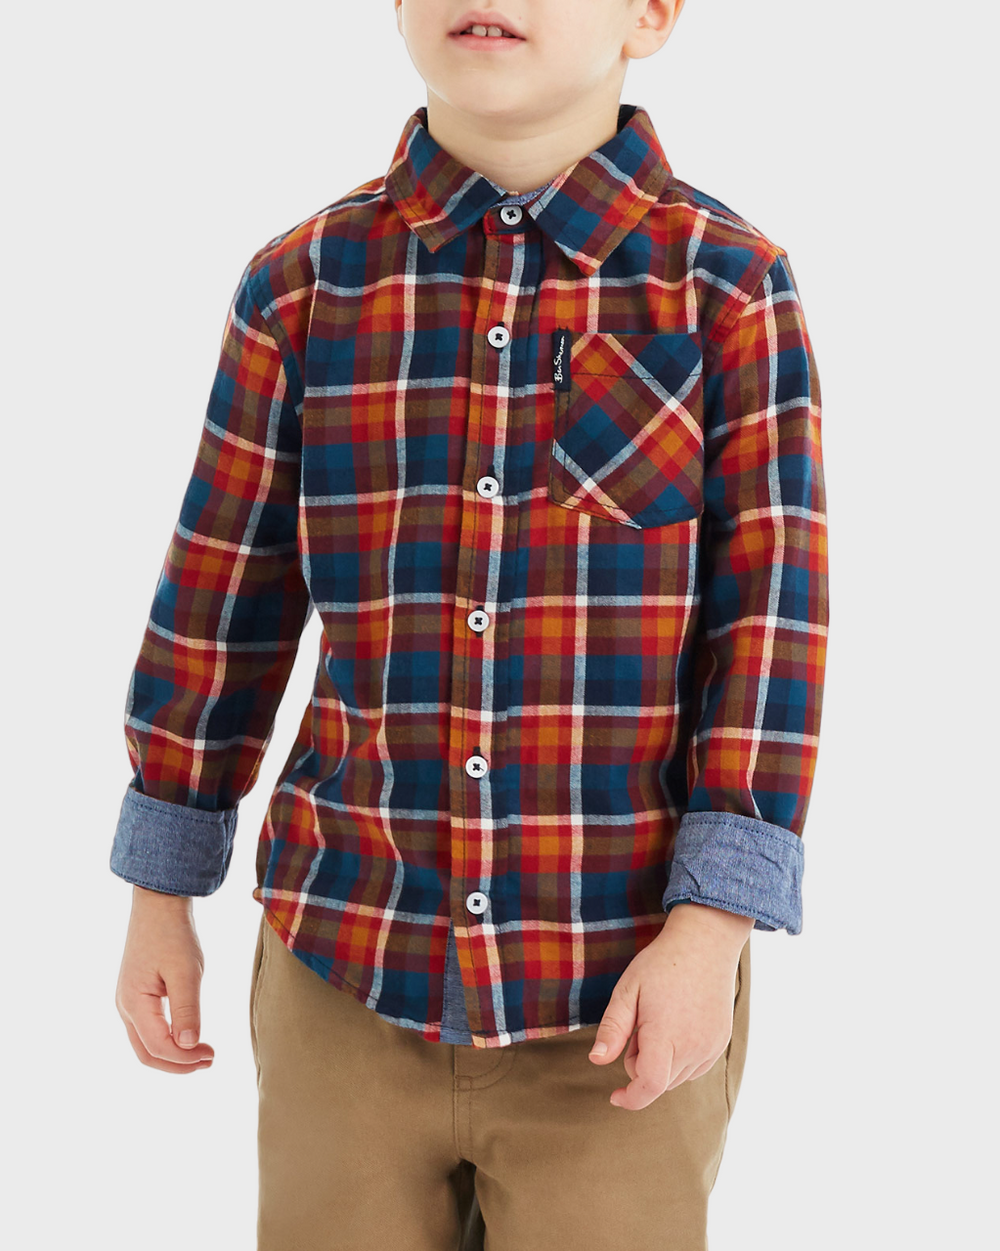 Boys Plaid Button-Down Shirt (Sizes 4-7)